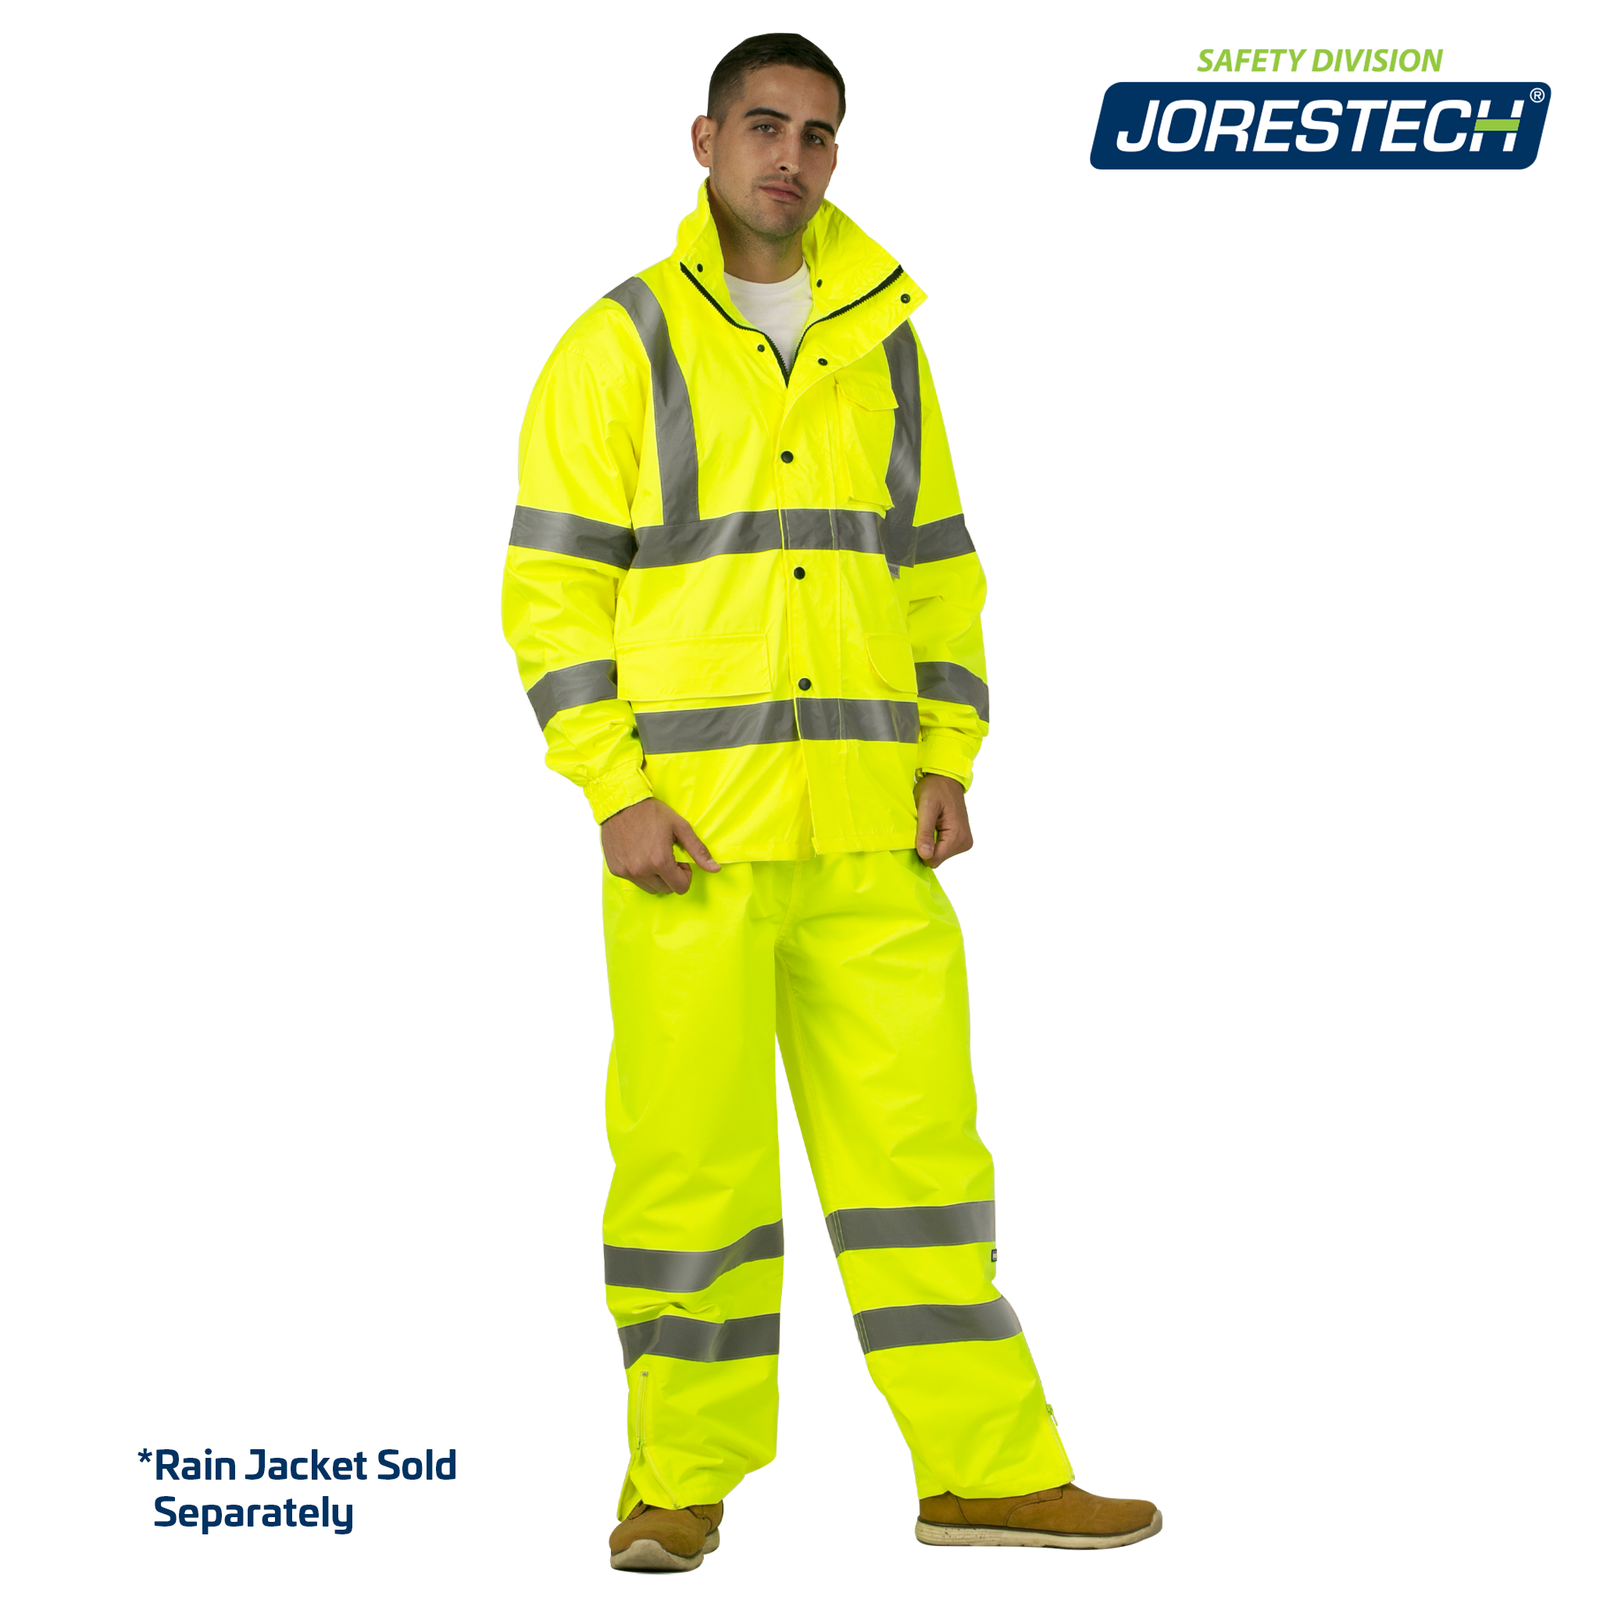 Man wearing the Jorestech high visibility rain pants and rain jacket. Text reads 